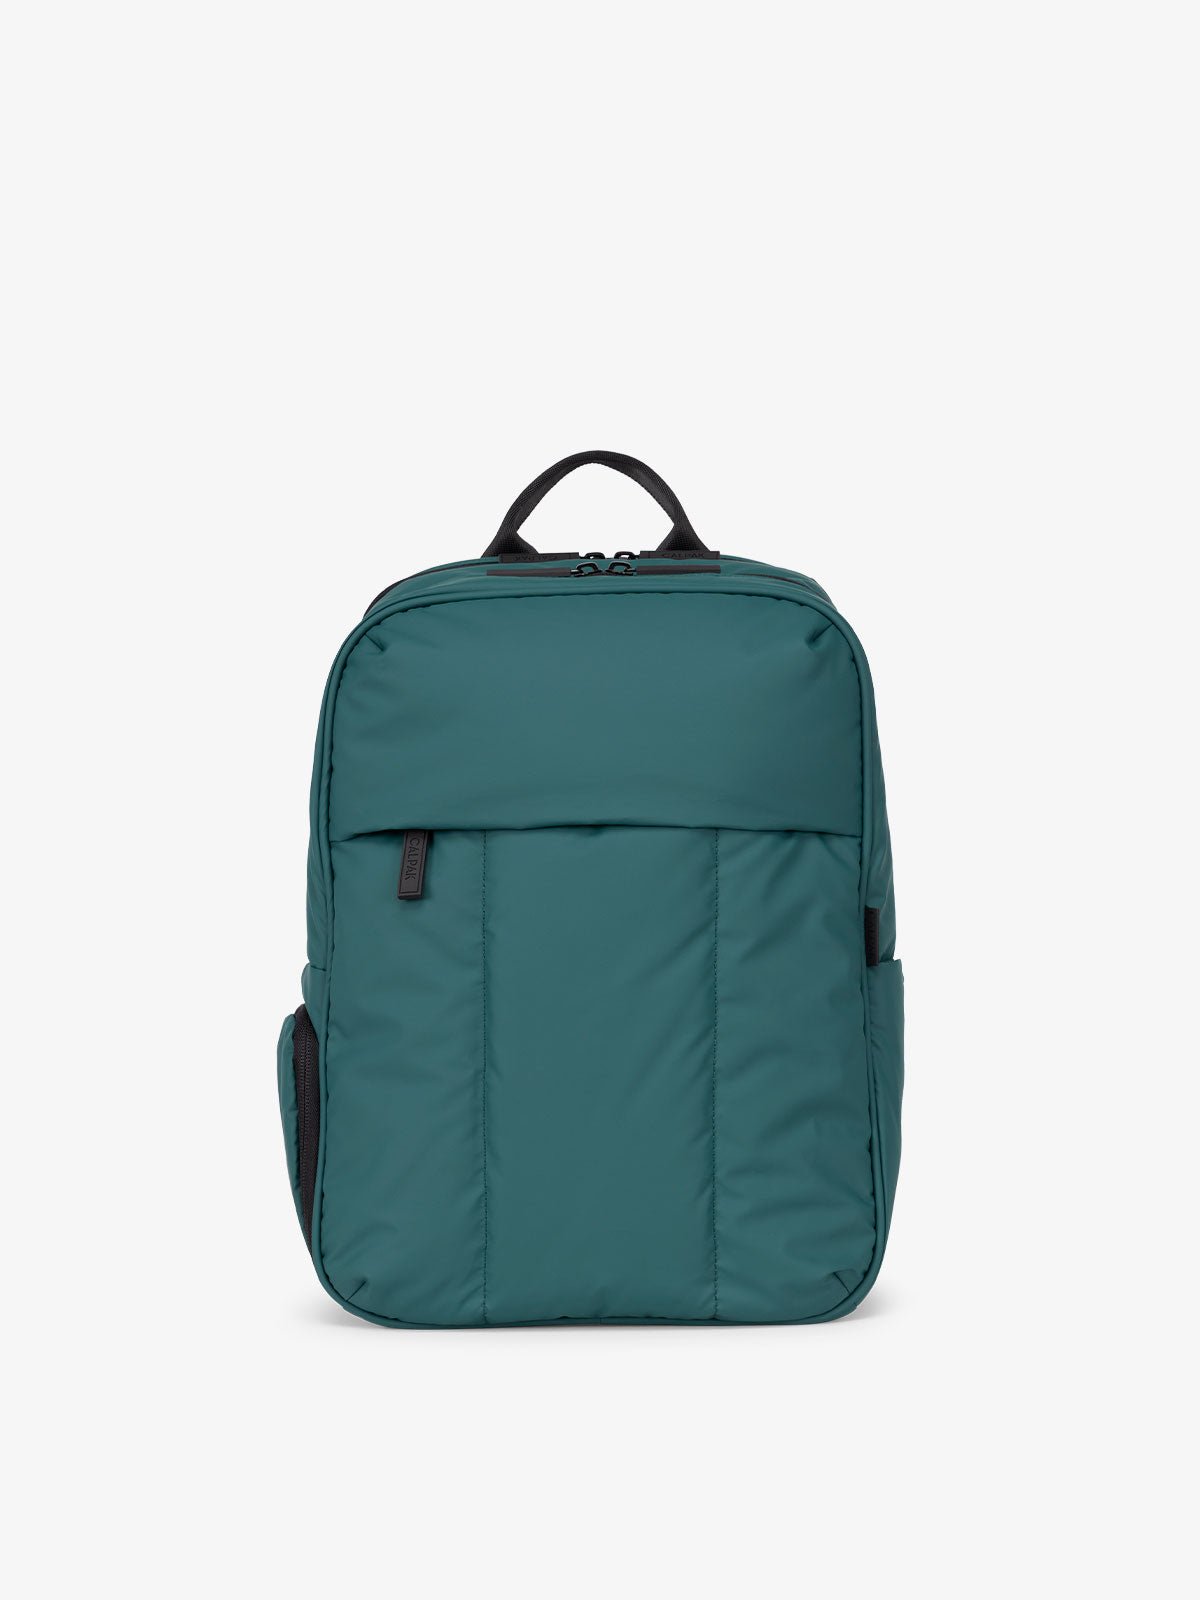 CALPAK Luka laptop backpack in kale green